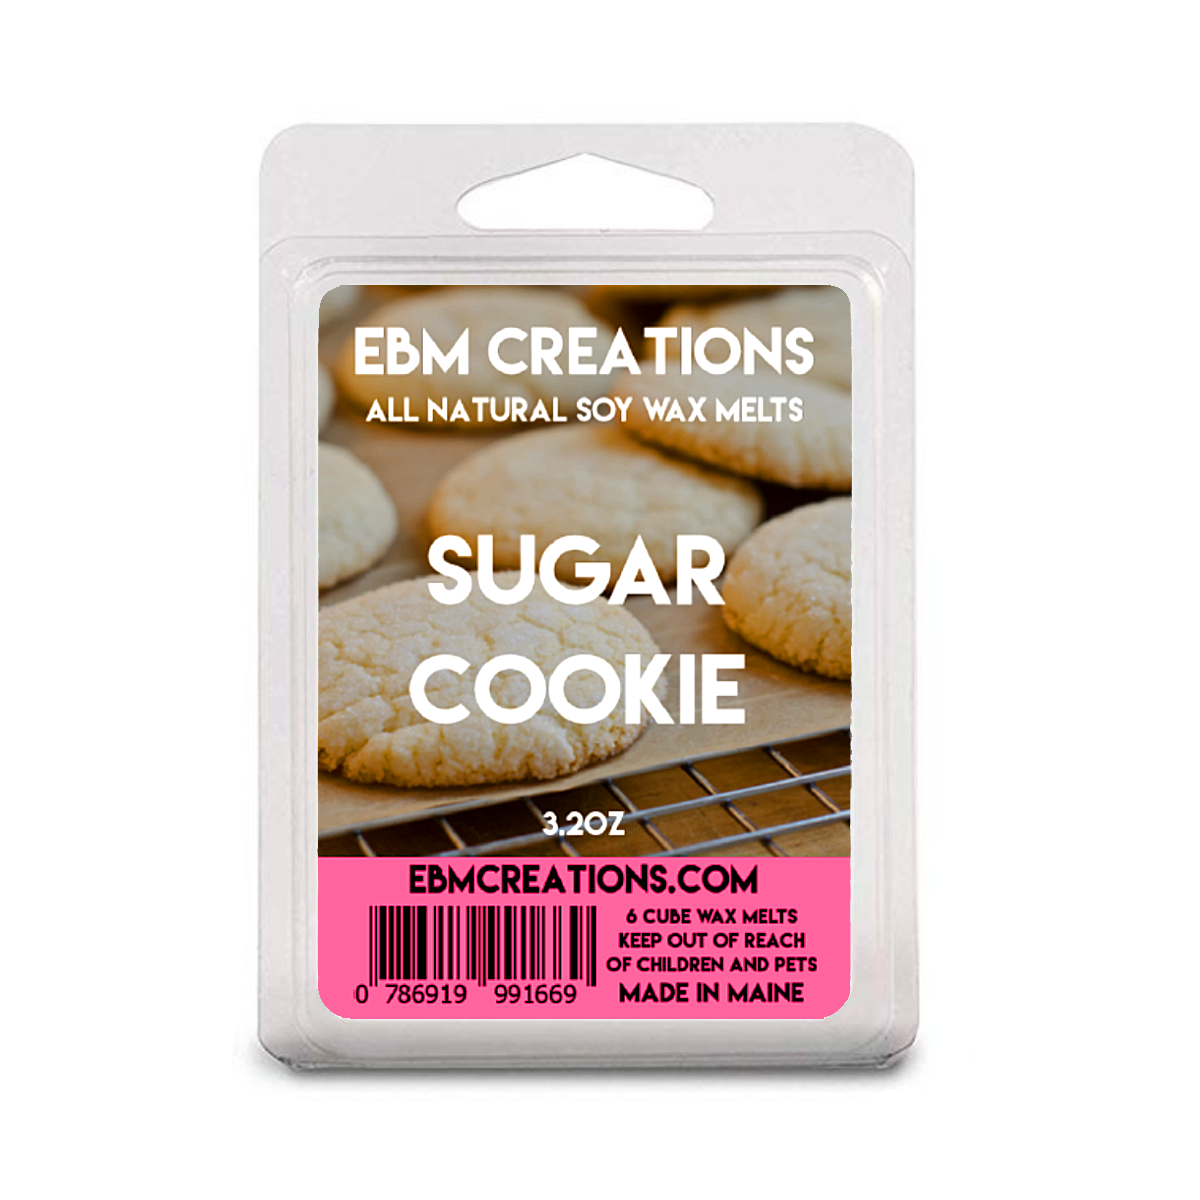 Sugar Cookie - 3.2 oz Clamshell